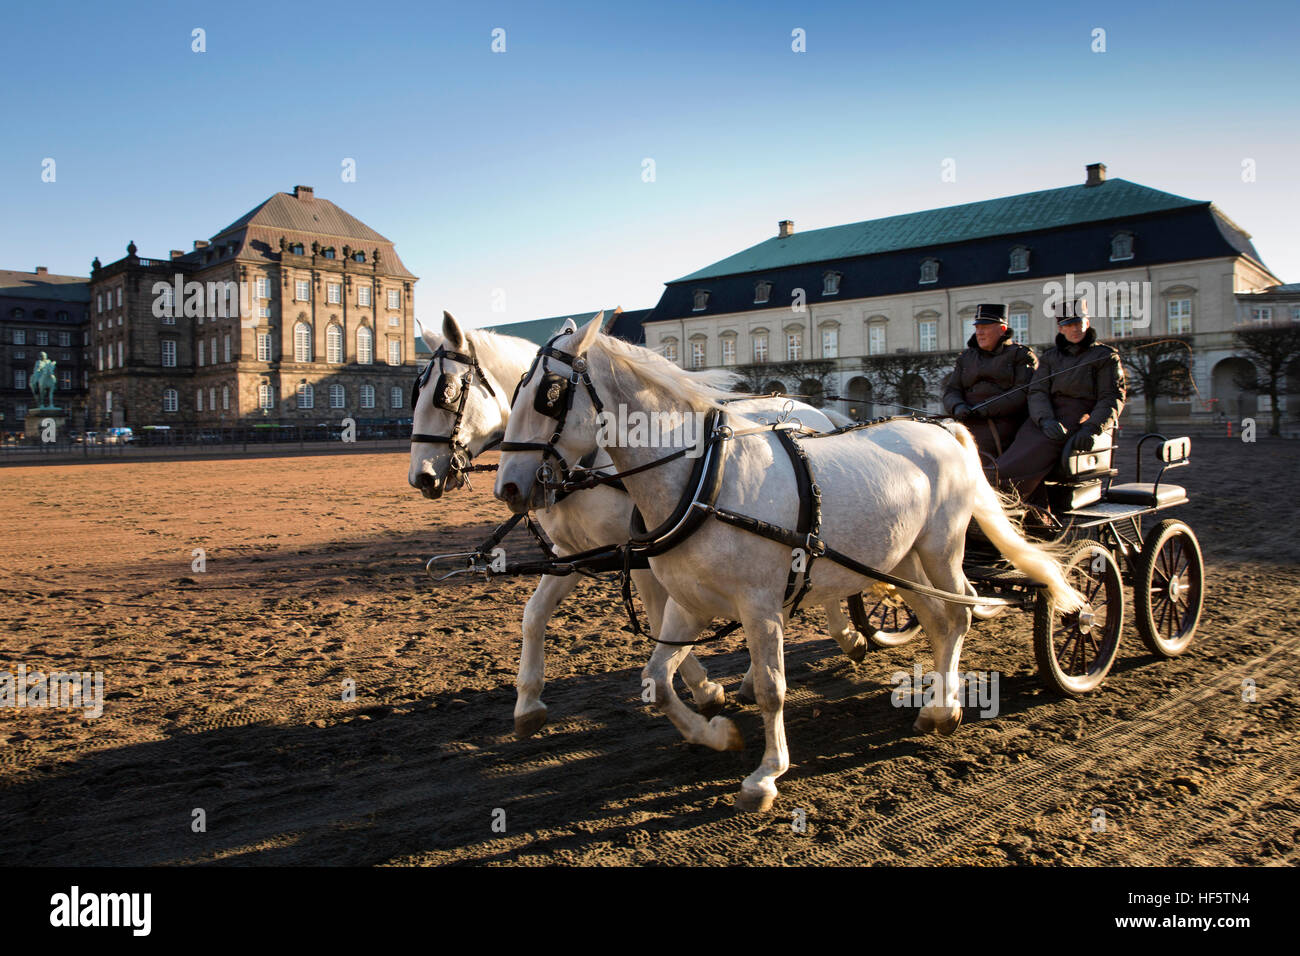 Denmark, Copenhagen, Christiansborg Palace, exercising carriage horses in palace courtyard Stock Photo